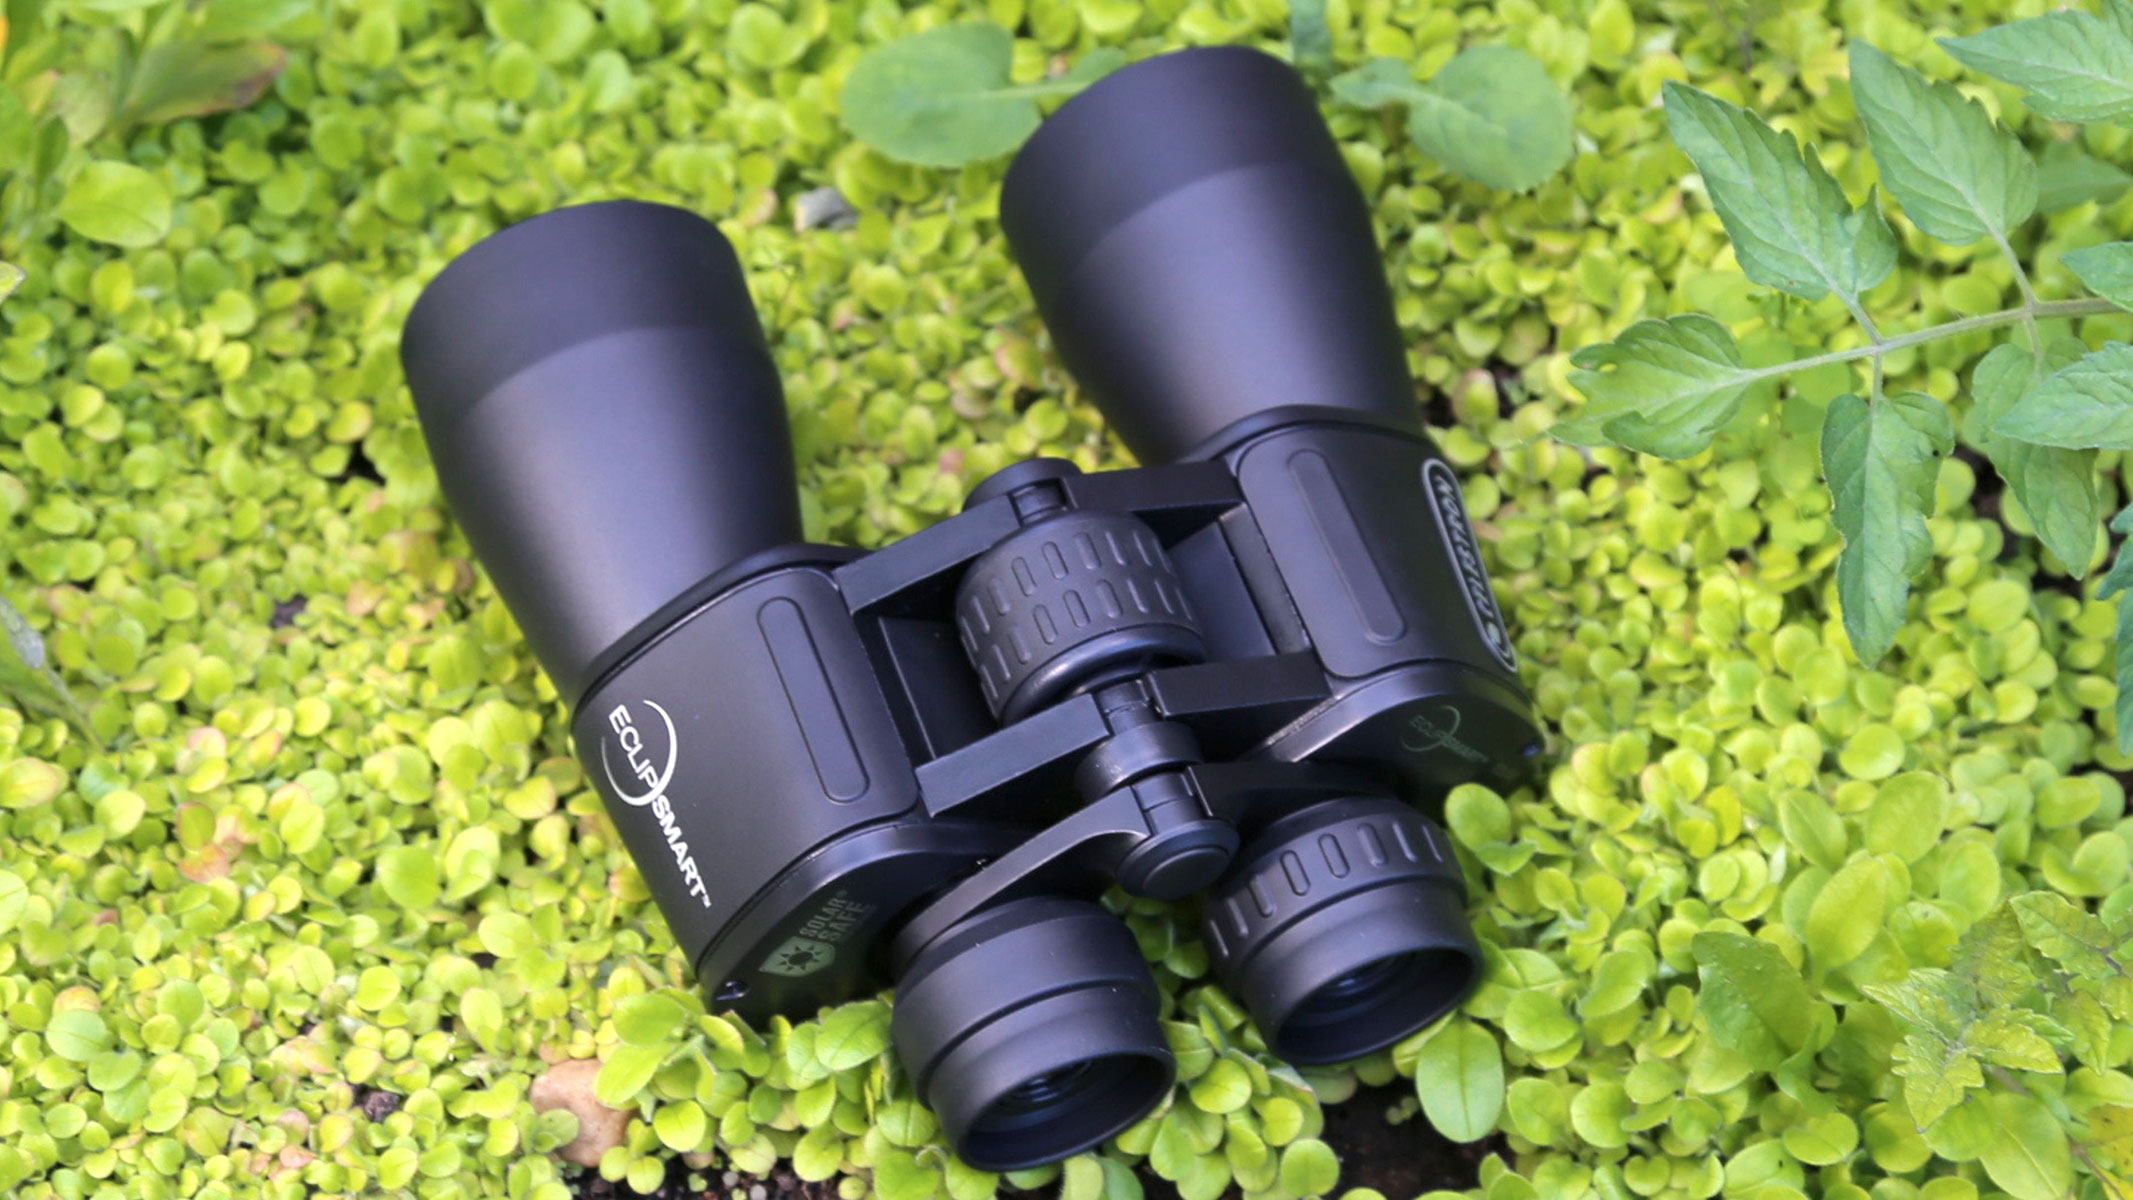 EclipSmart 12x50 binoculars placed on foliage